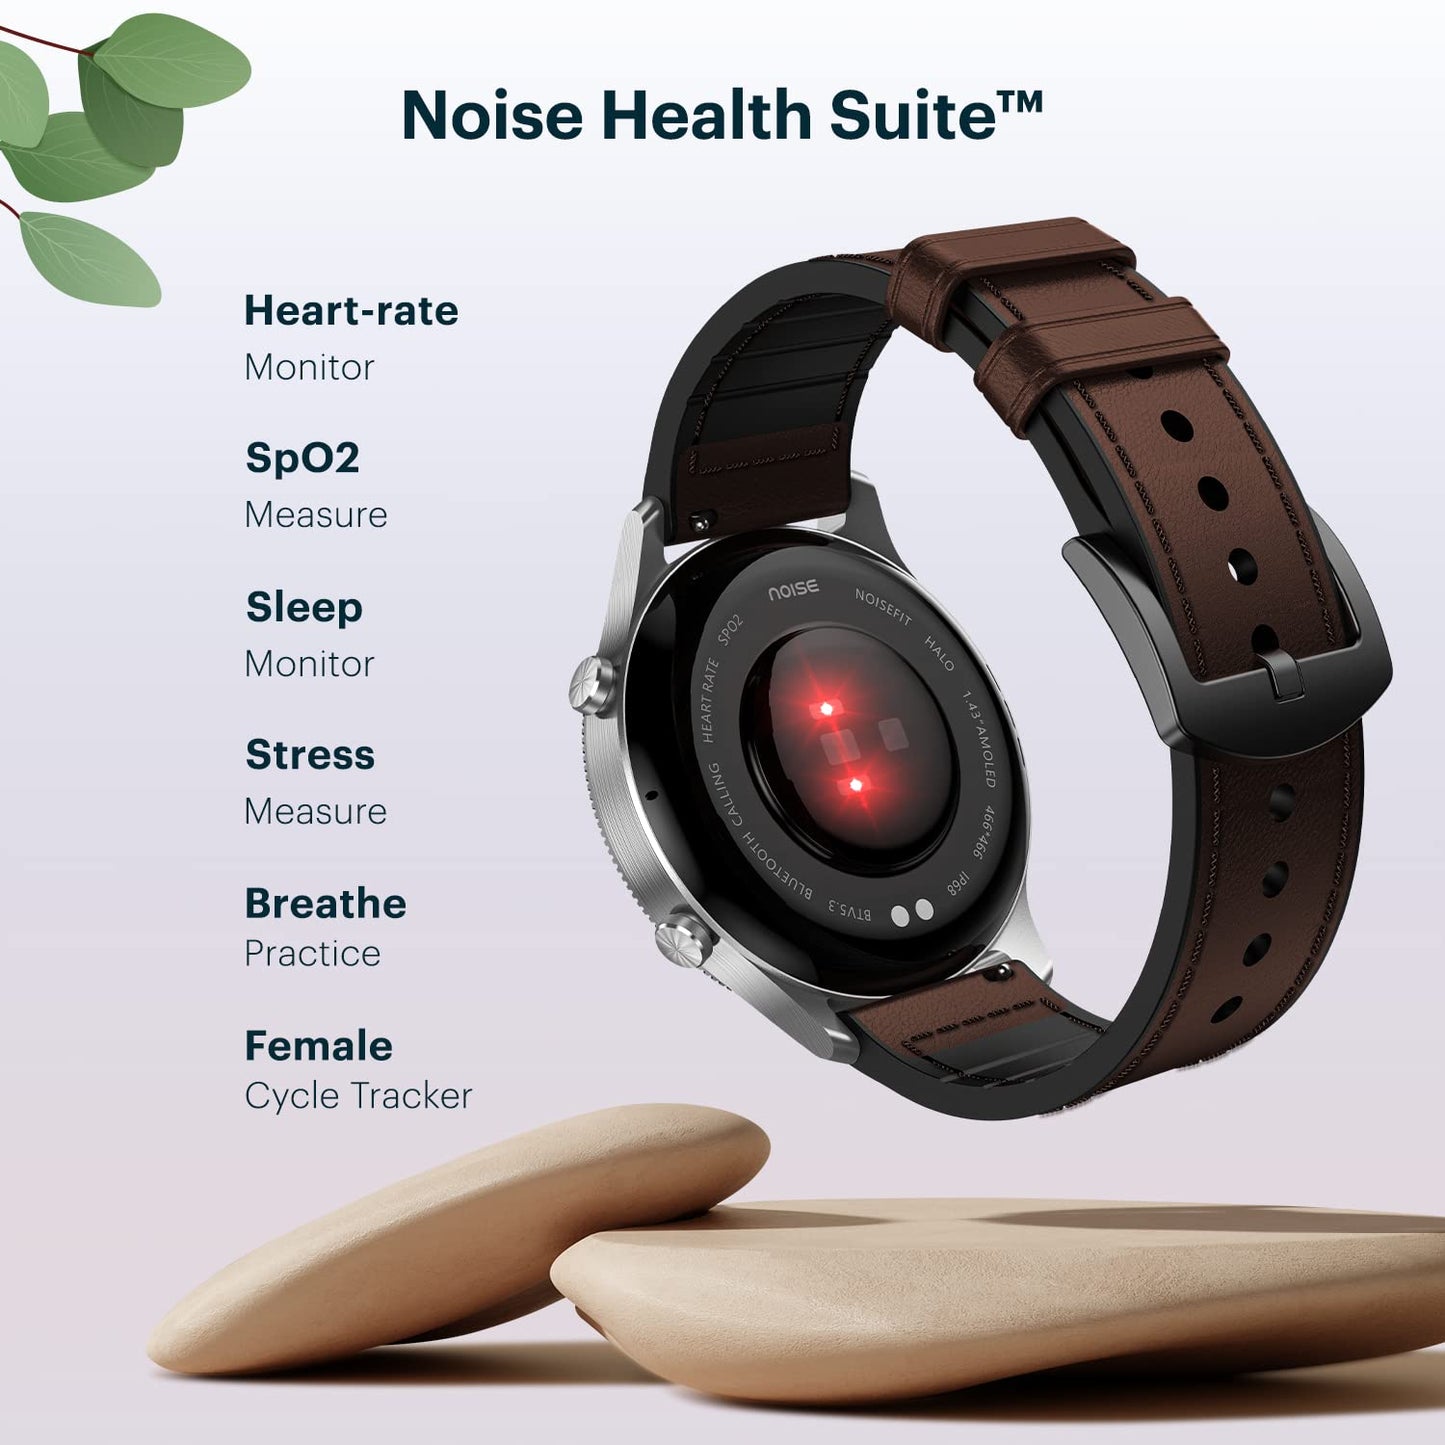 NoiseFit Halo 1.43" AMOLED Display, Bluetooth Calling Round Dial Smart Watch, Premium Metallic Build